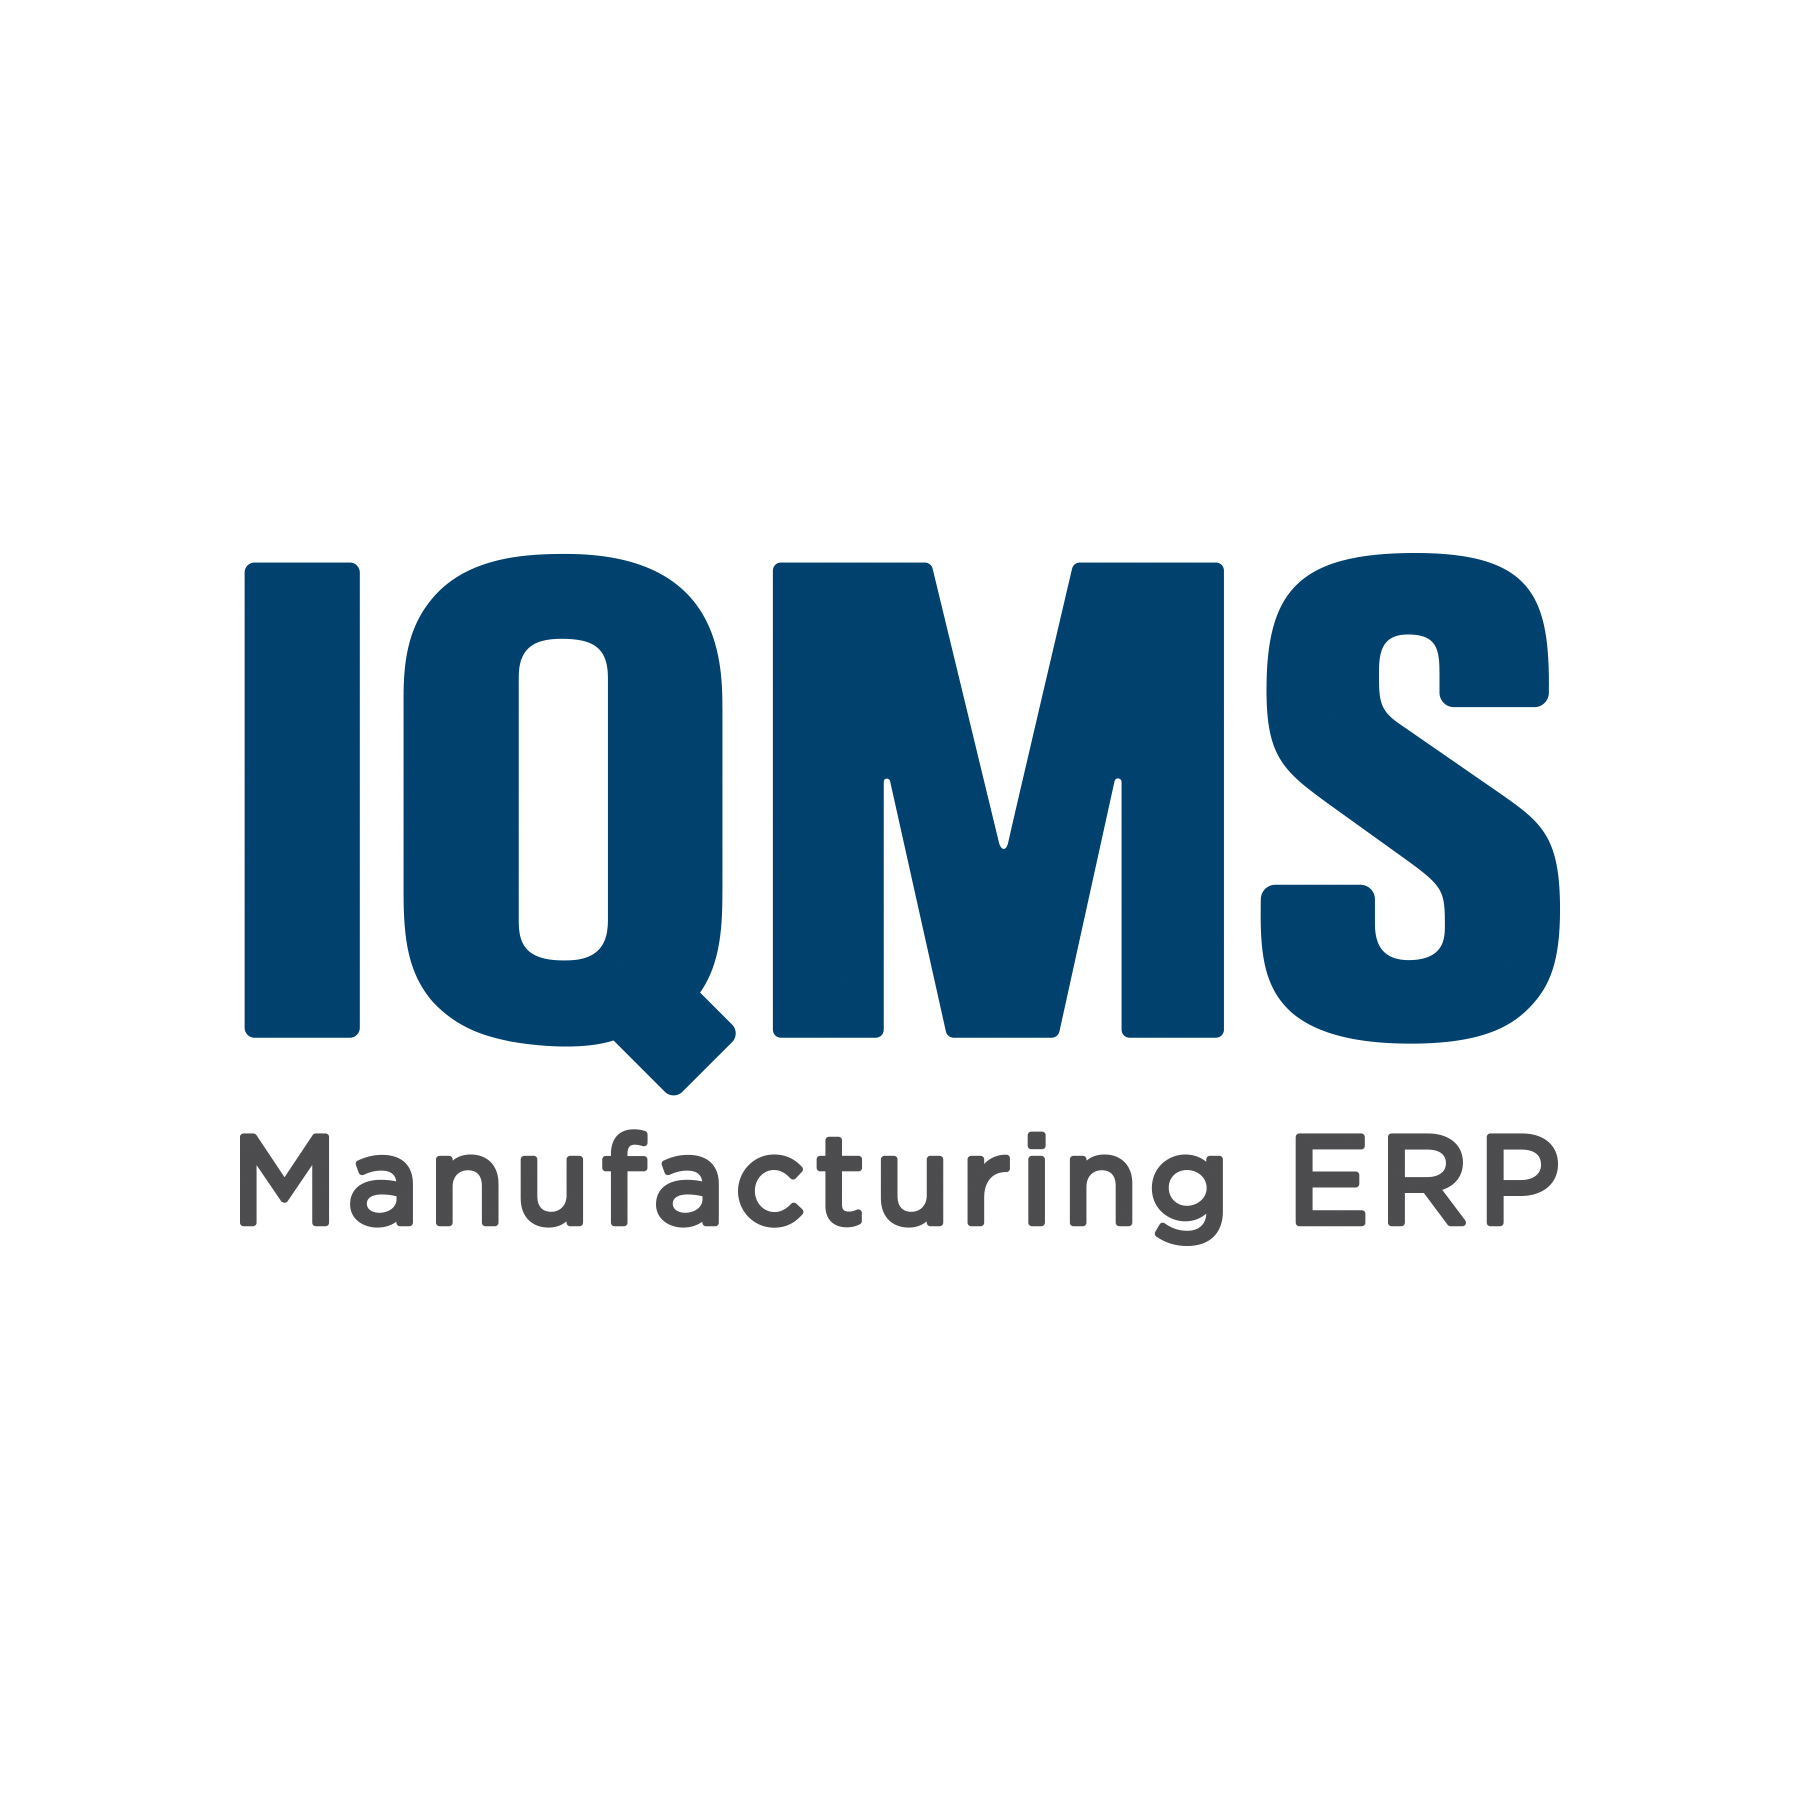 1800 Logo - File:IQMS logo.png - Wikimedia Commons